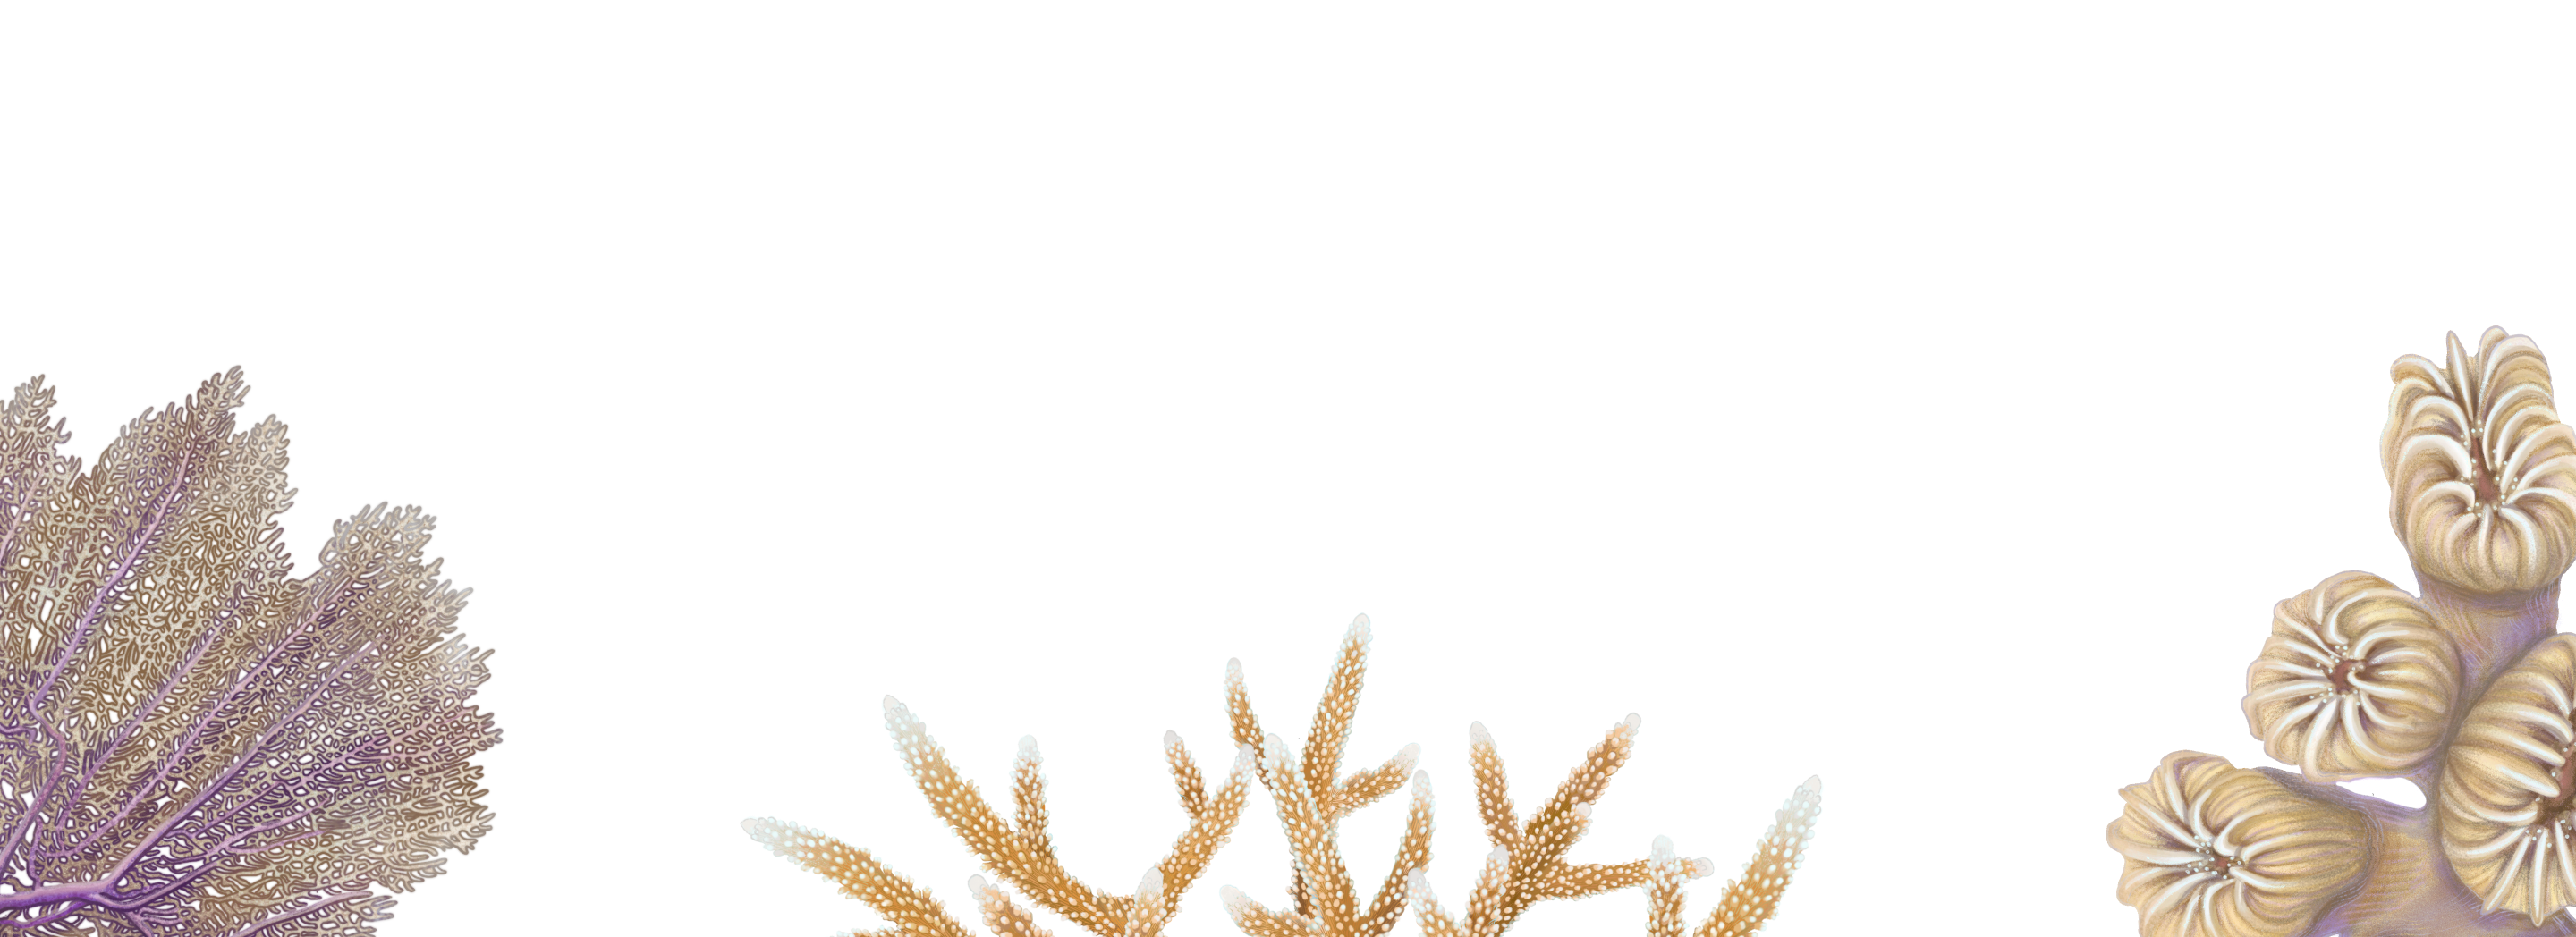 coral illustrations